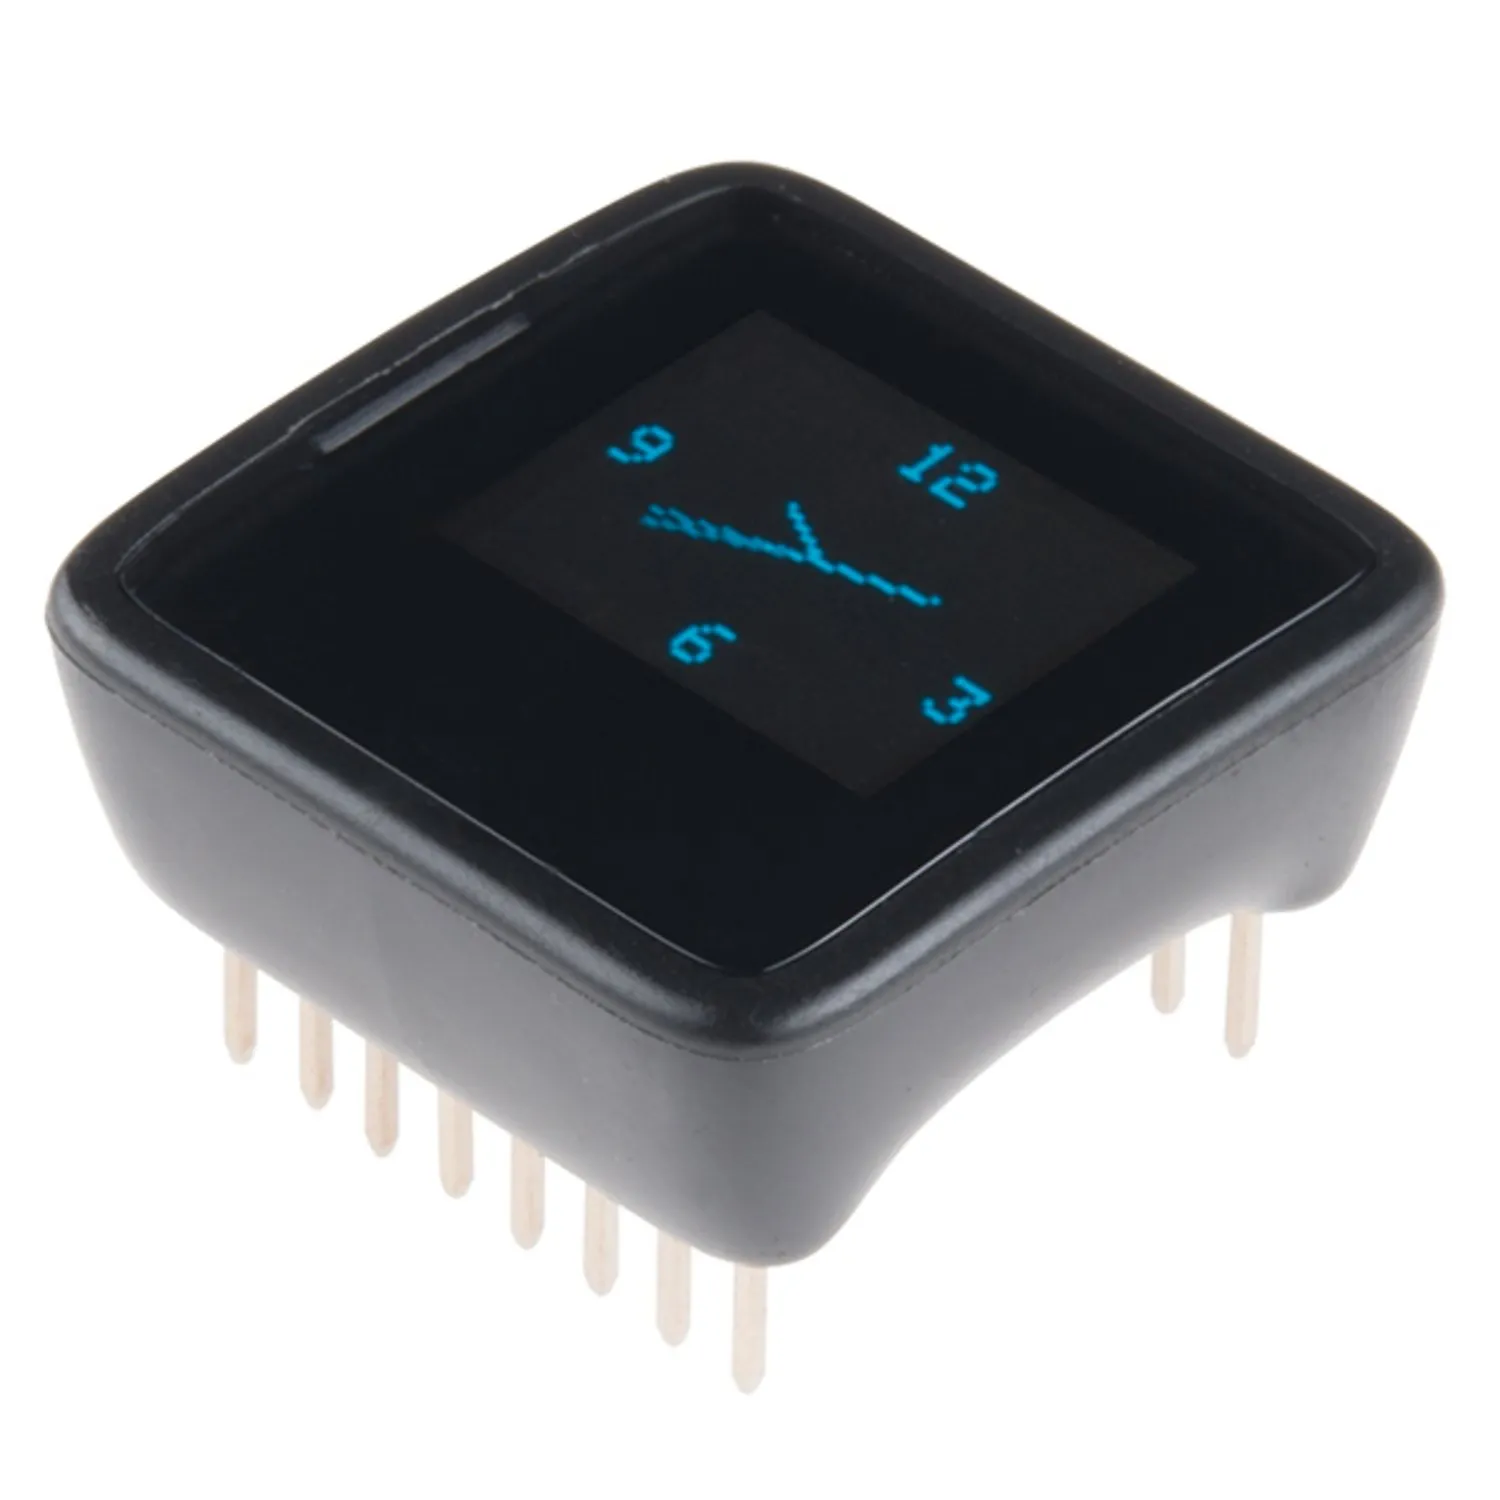 Photo of SparkFun MicroView - OLED Arduino Module